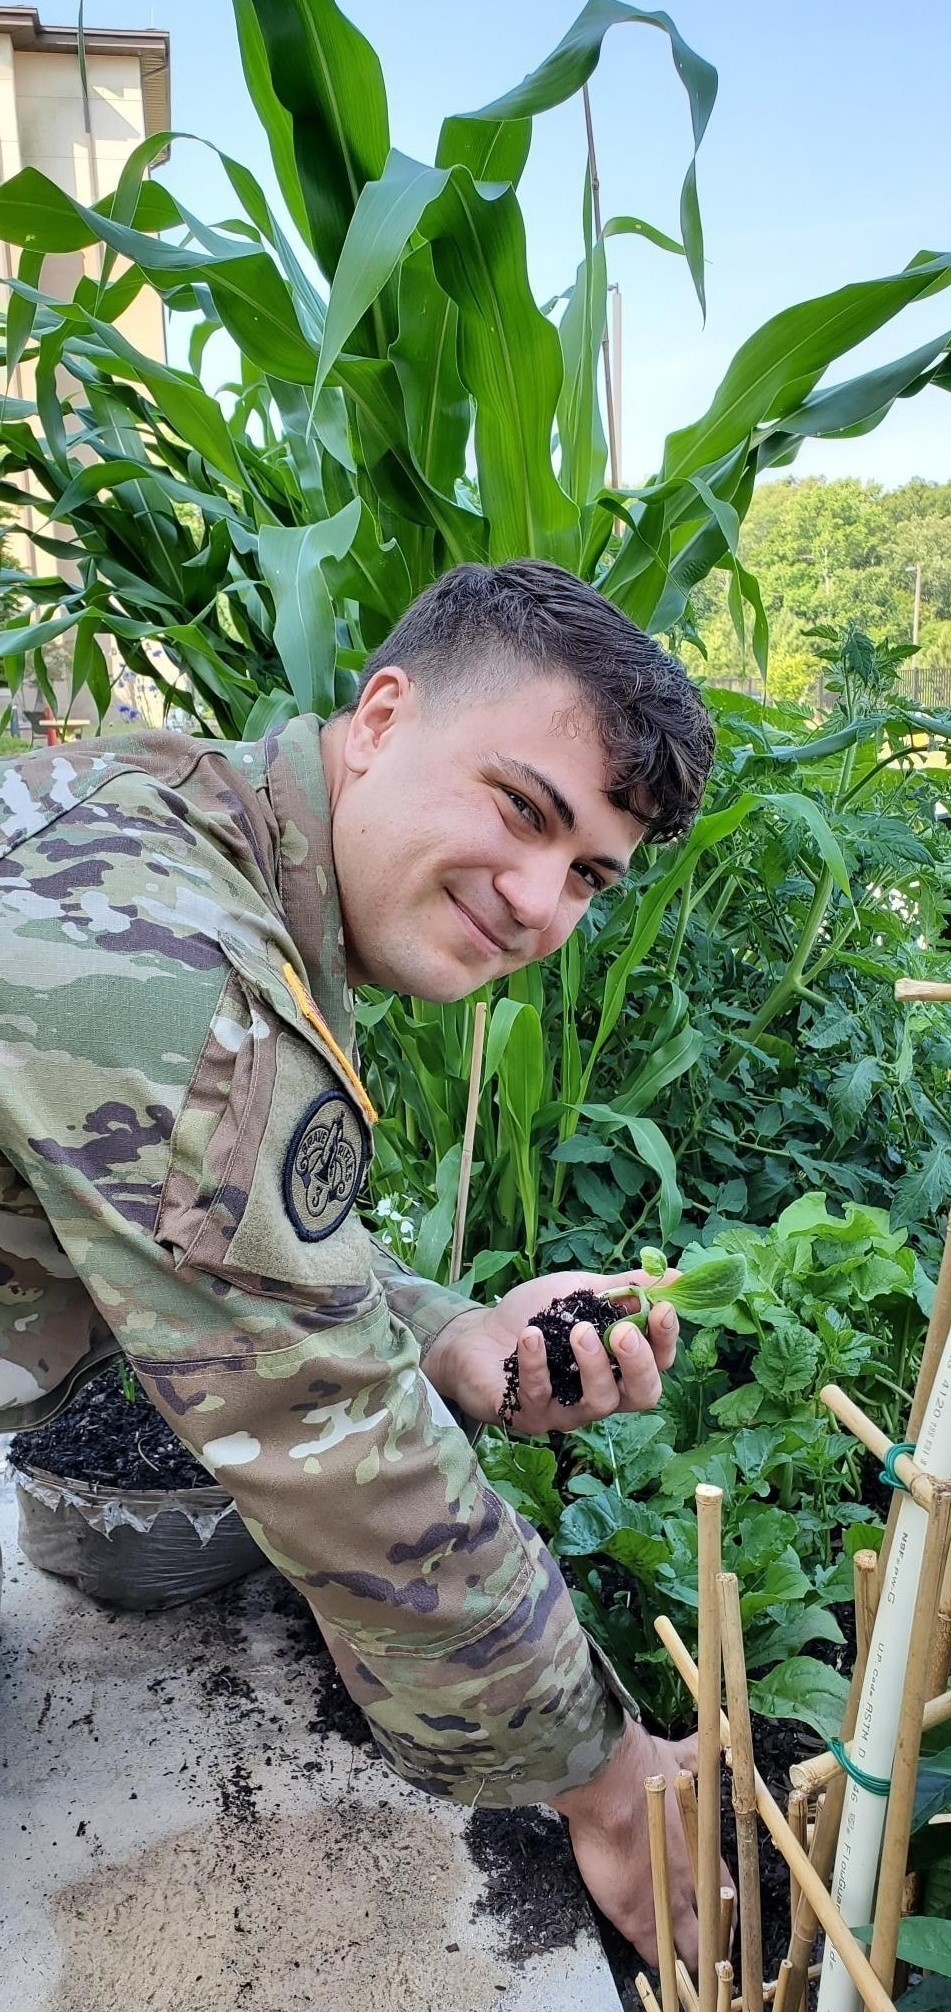 Fort Benning Soldier Recovery Unit Garden Brings Joy